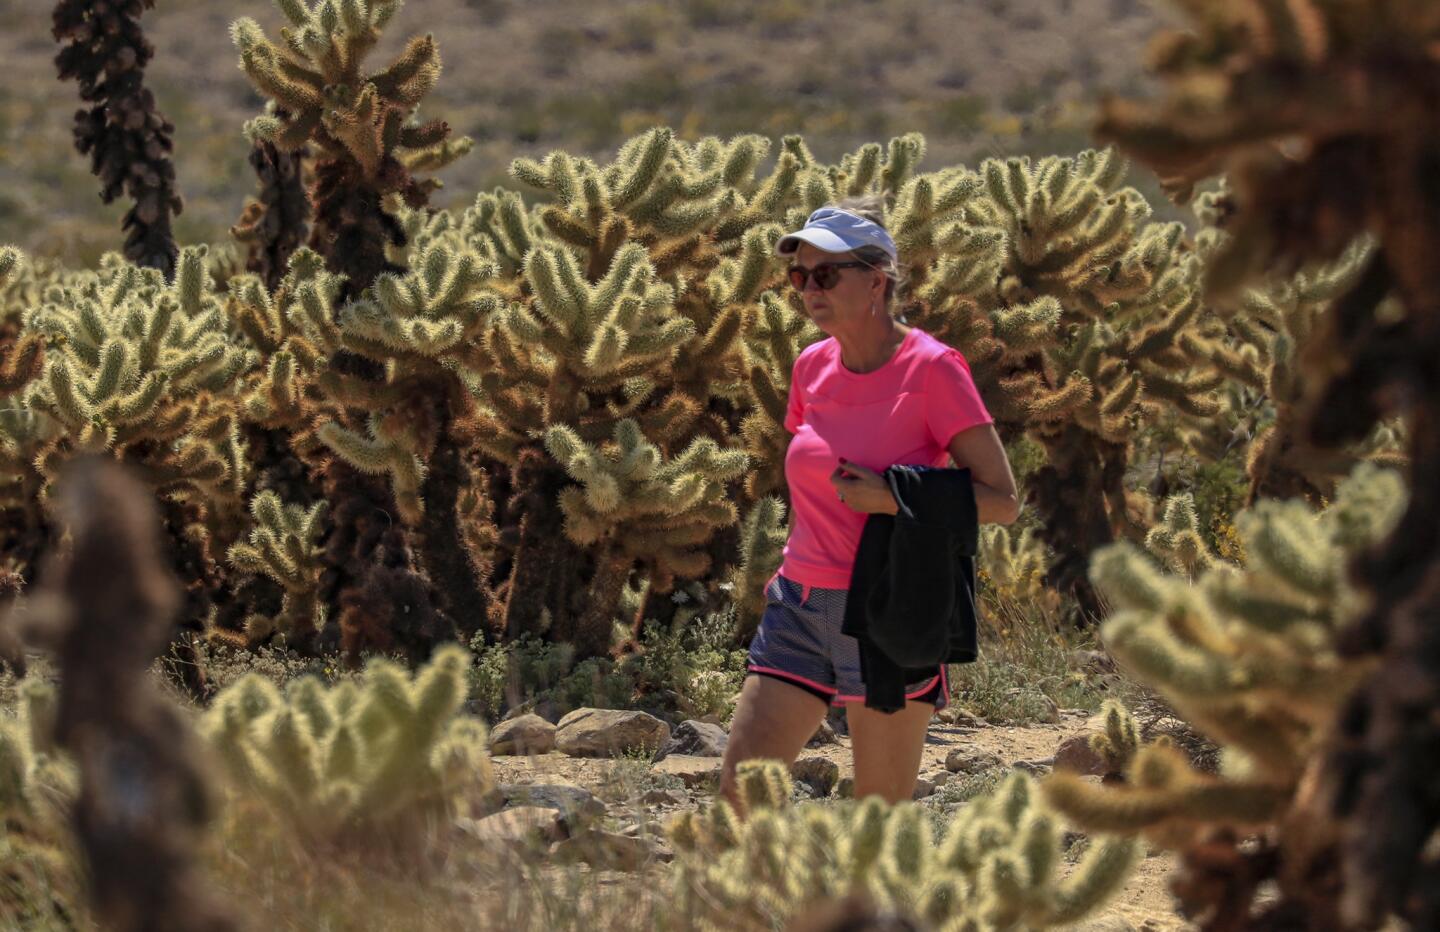 A visitor strolls through the cholla cactus garden in Joshua Tree National Park.